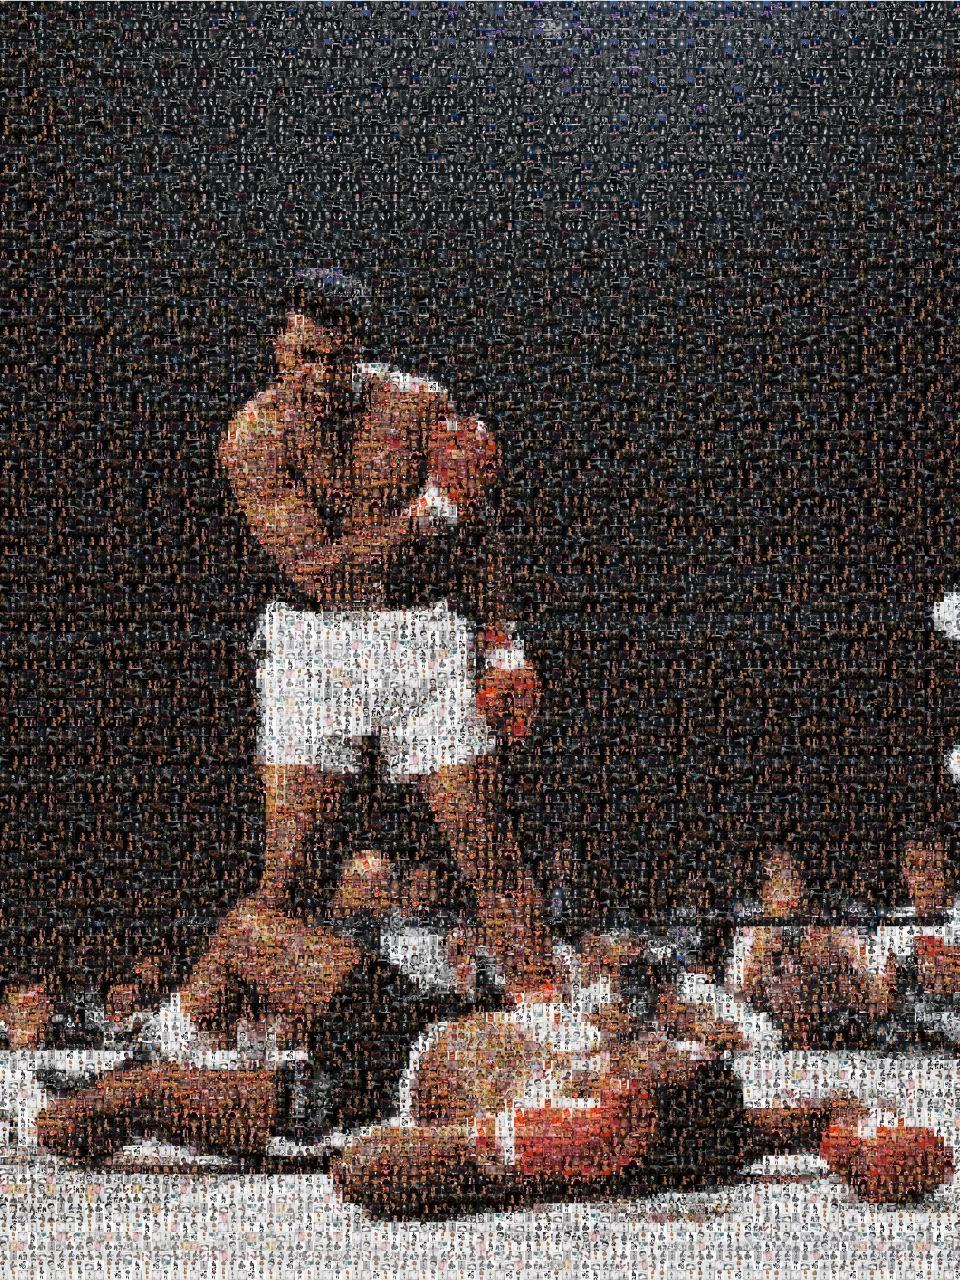 "Ali" Muhammad Ali Portrait 28x40  Boxing Photography Pop Art Photograph